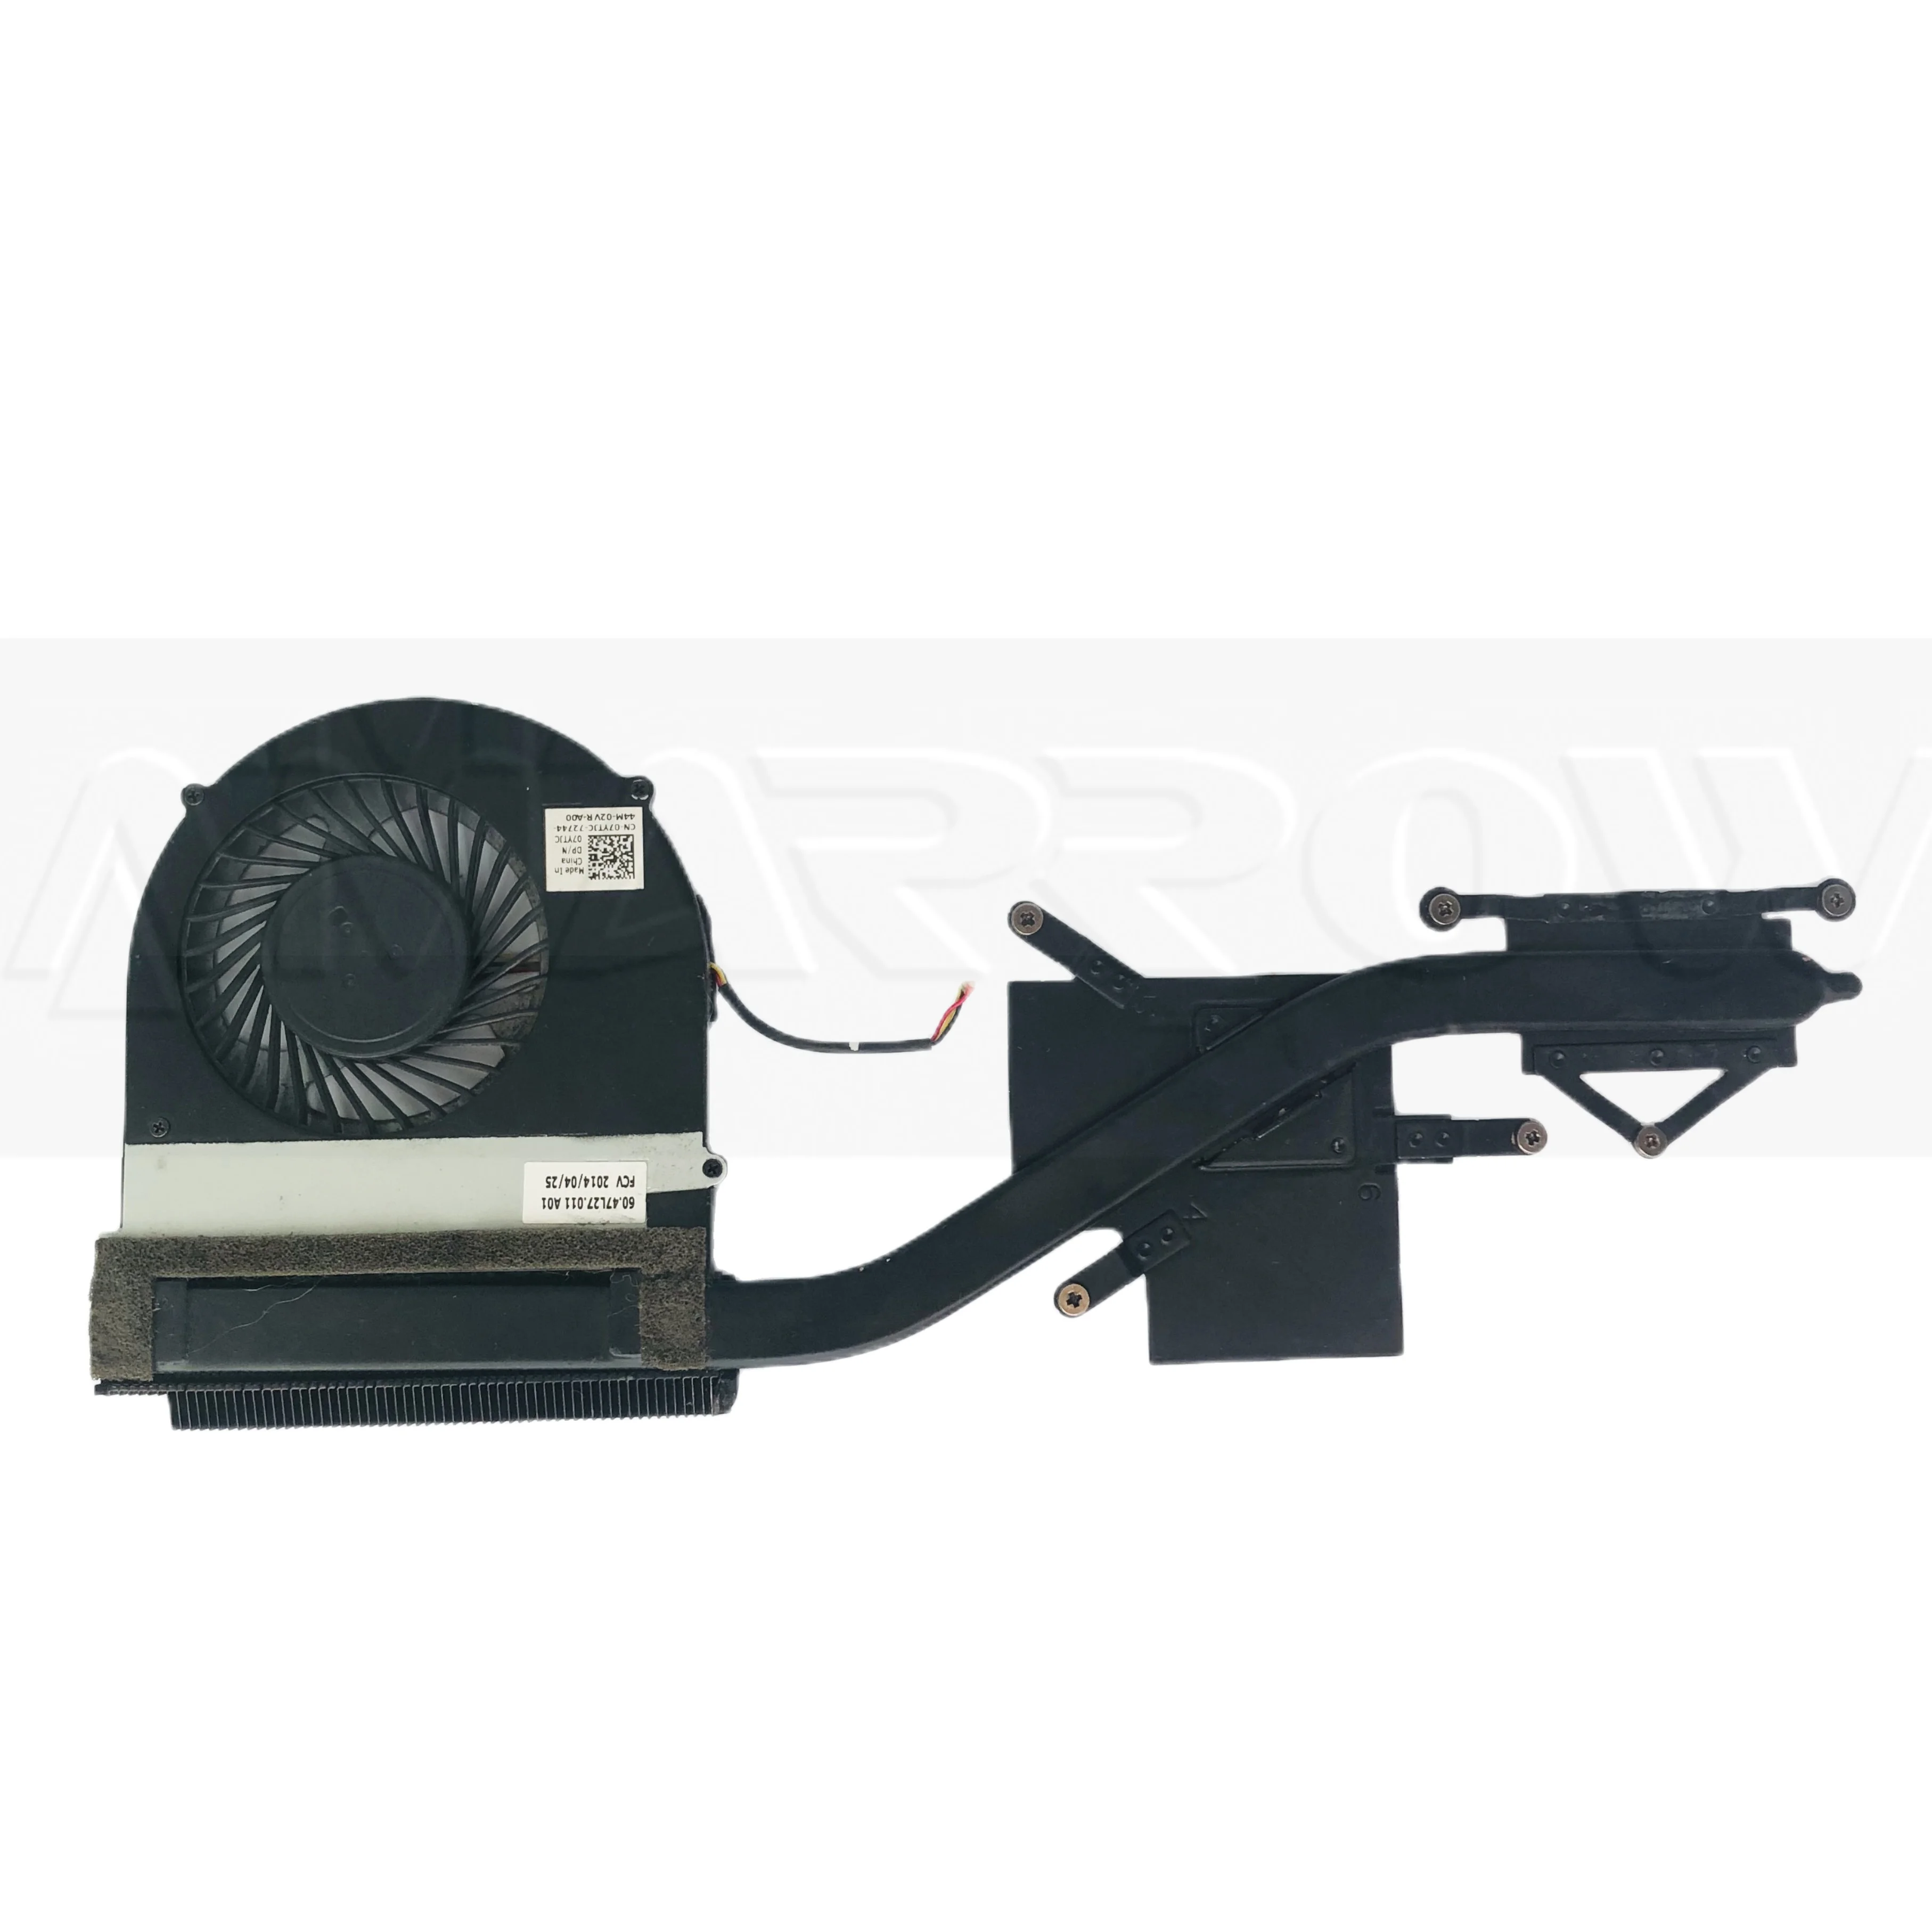 New Original laptop heatsink cooling fan cpu cooler For DELL Inspiron 7537 CPU heatsink and fan 07YTJC